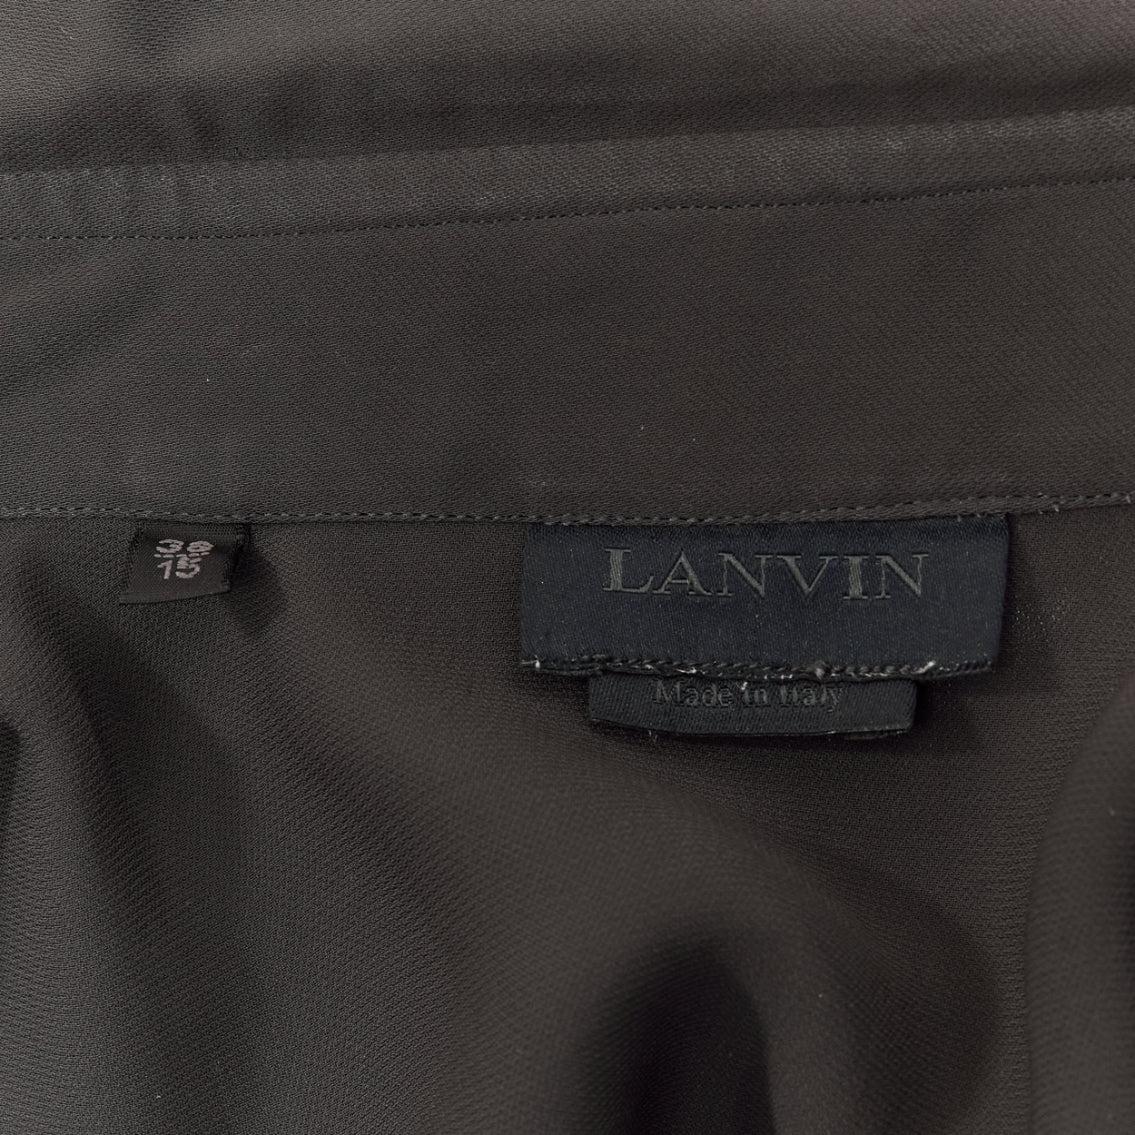 LANVIN grey black silky twill mix texture short sleeves dress shirt EU38/15 S For Sale 4